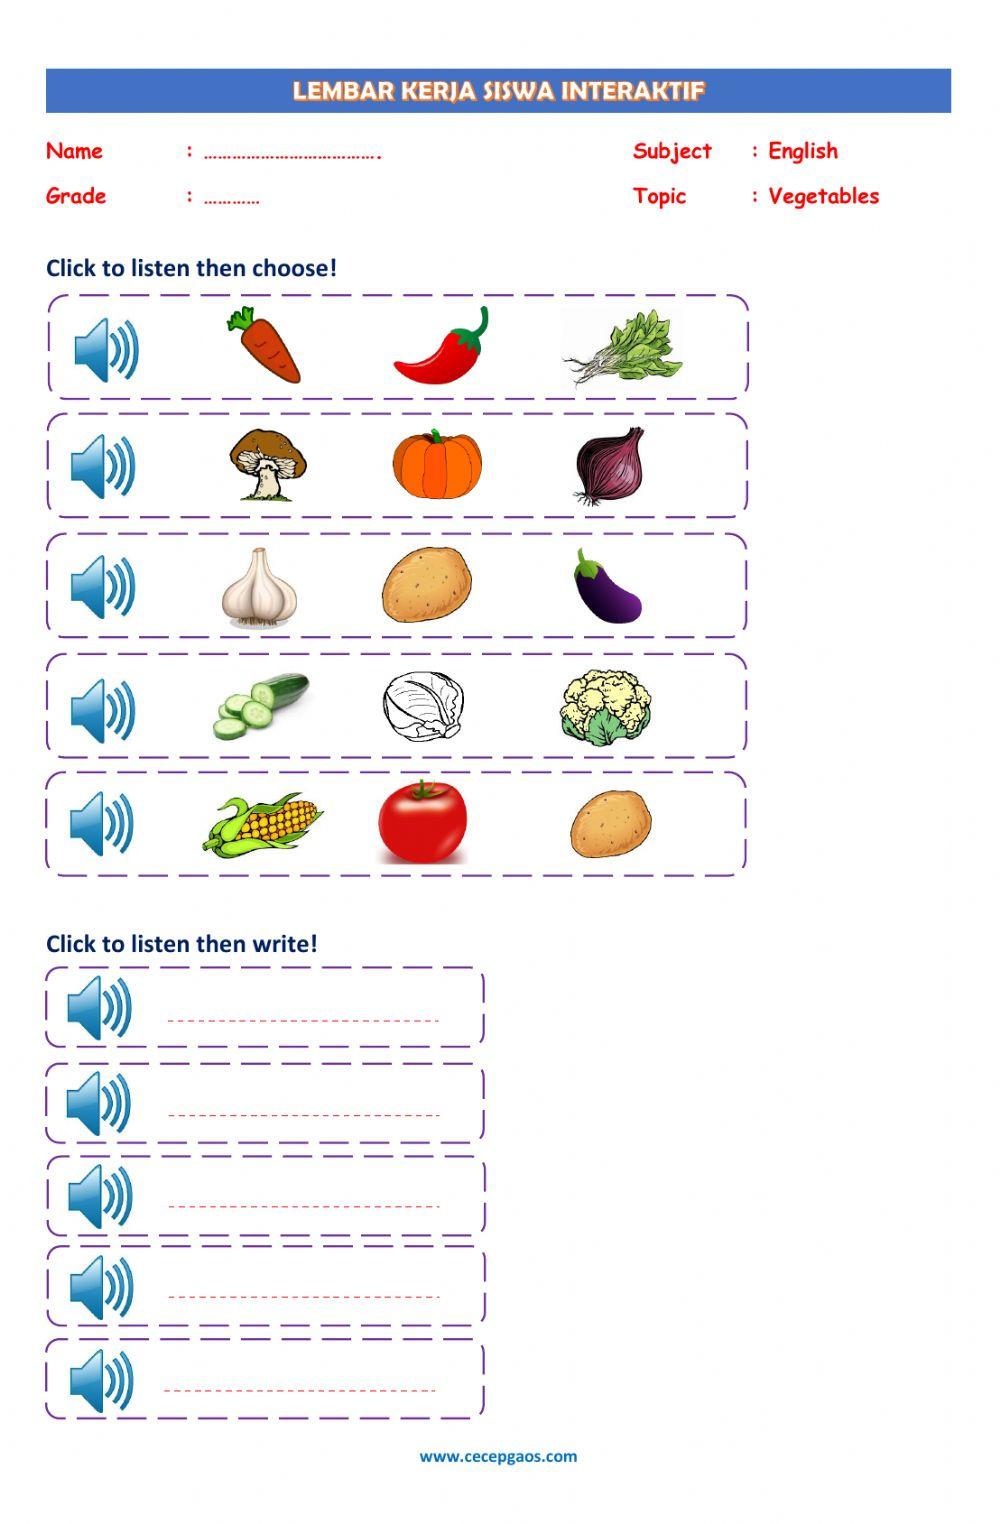 LKS Interaktif tentang Vegetables